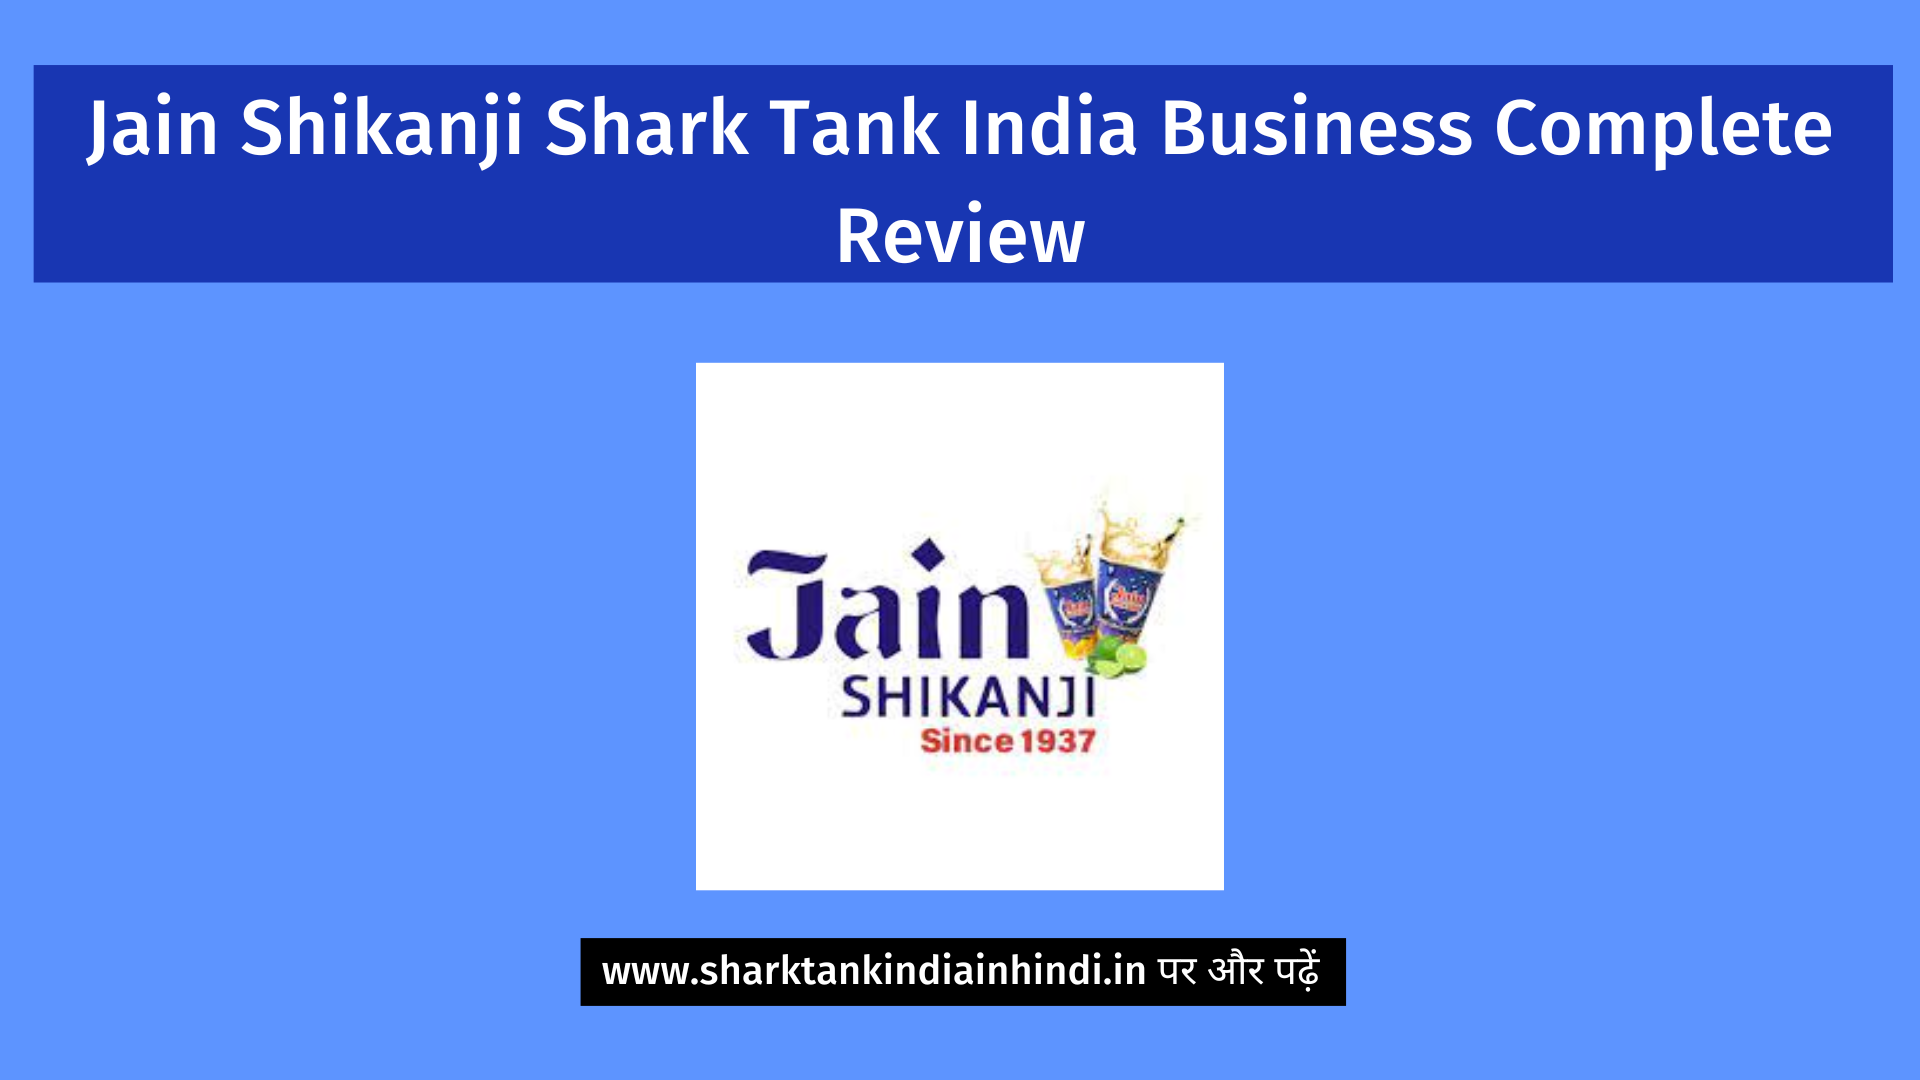 Jain Shikanji Shark Tank India Business Complete Review With Example